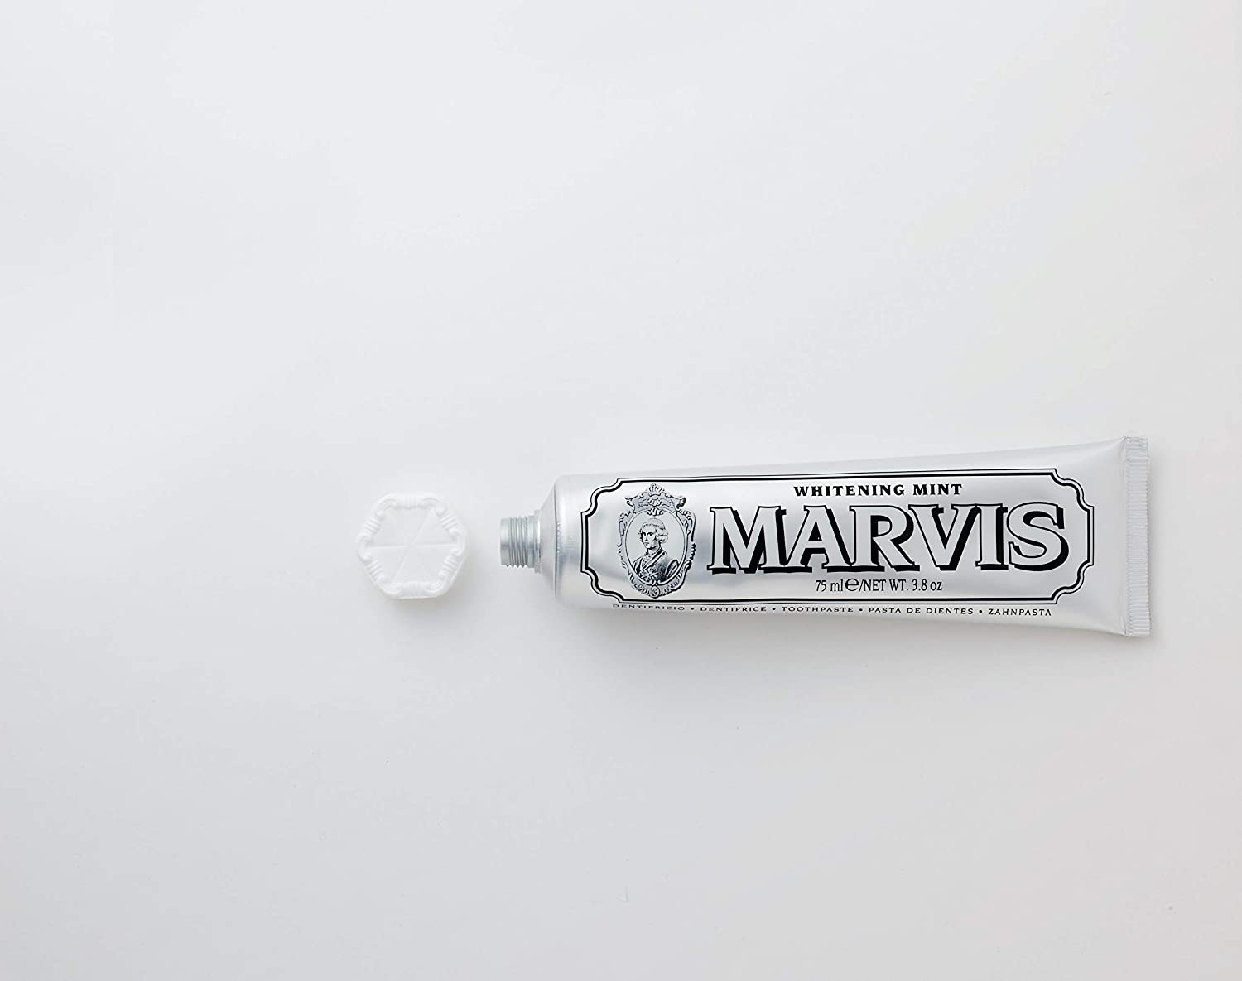 MARVIS(マービス) MARVISの商品画像6 